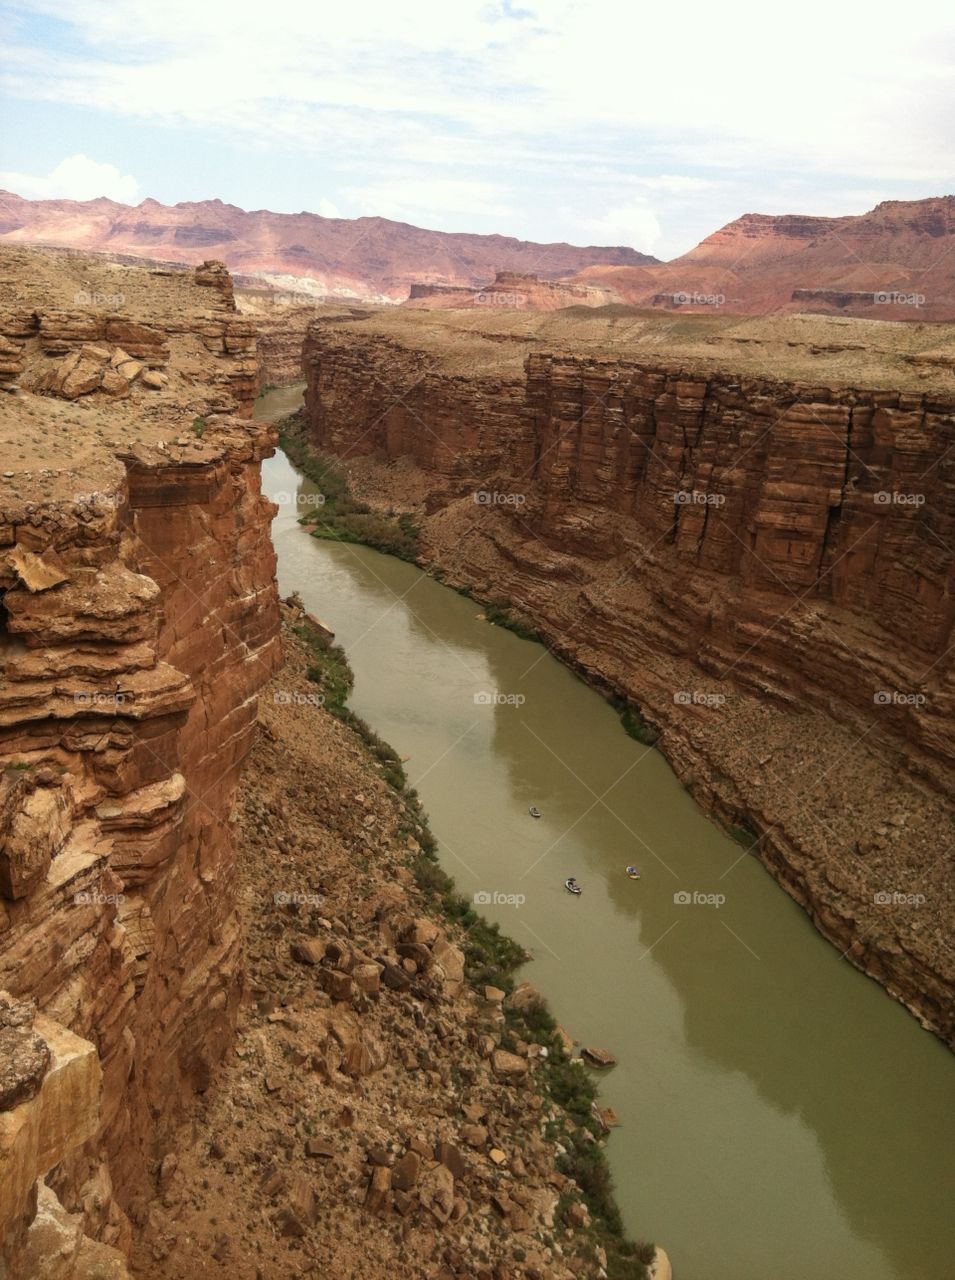 Raft the canyon. Rafting the Grand Canyon 